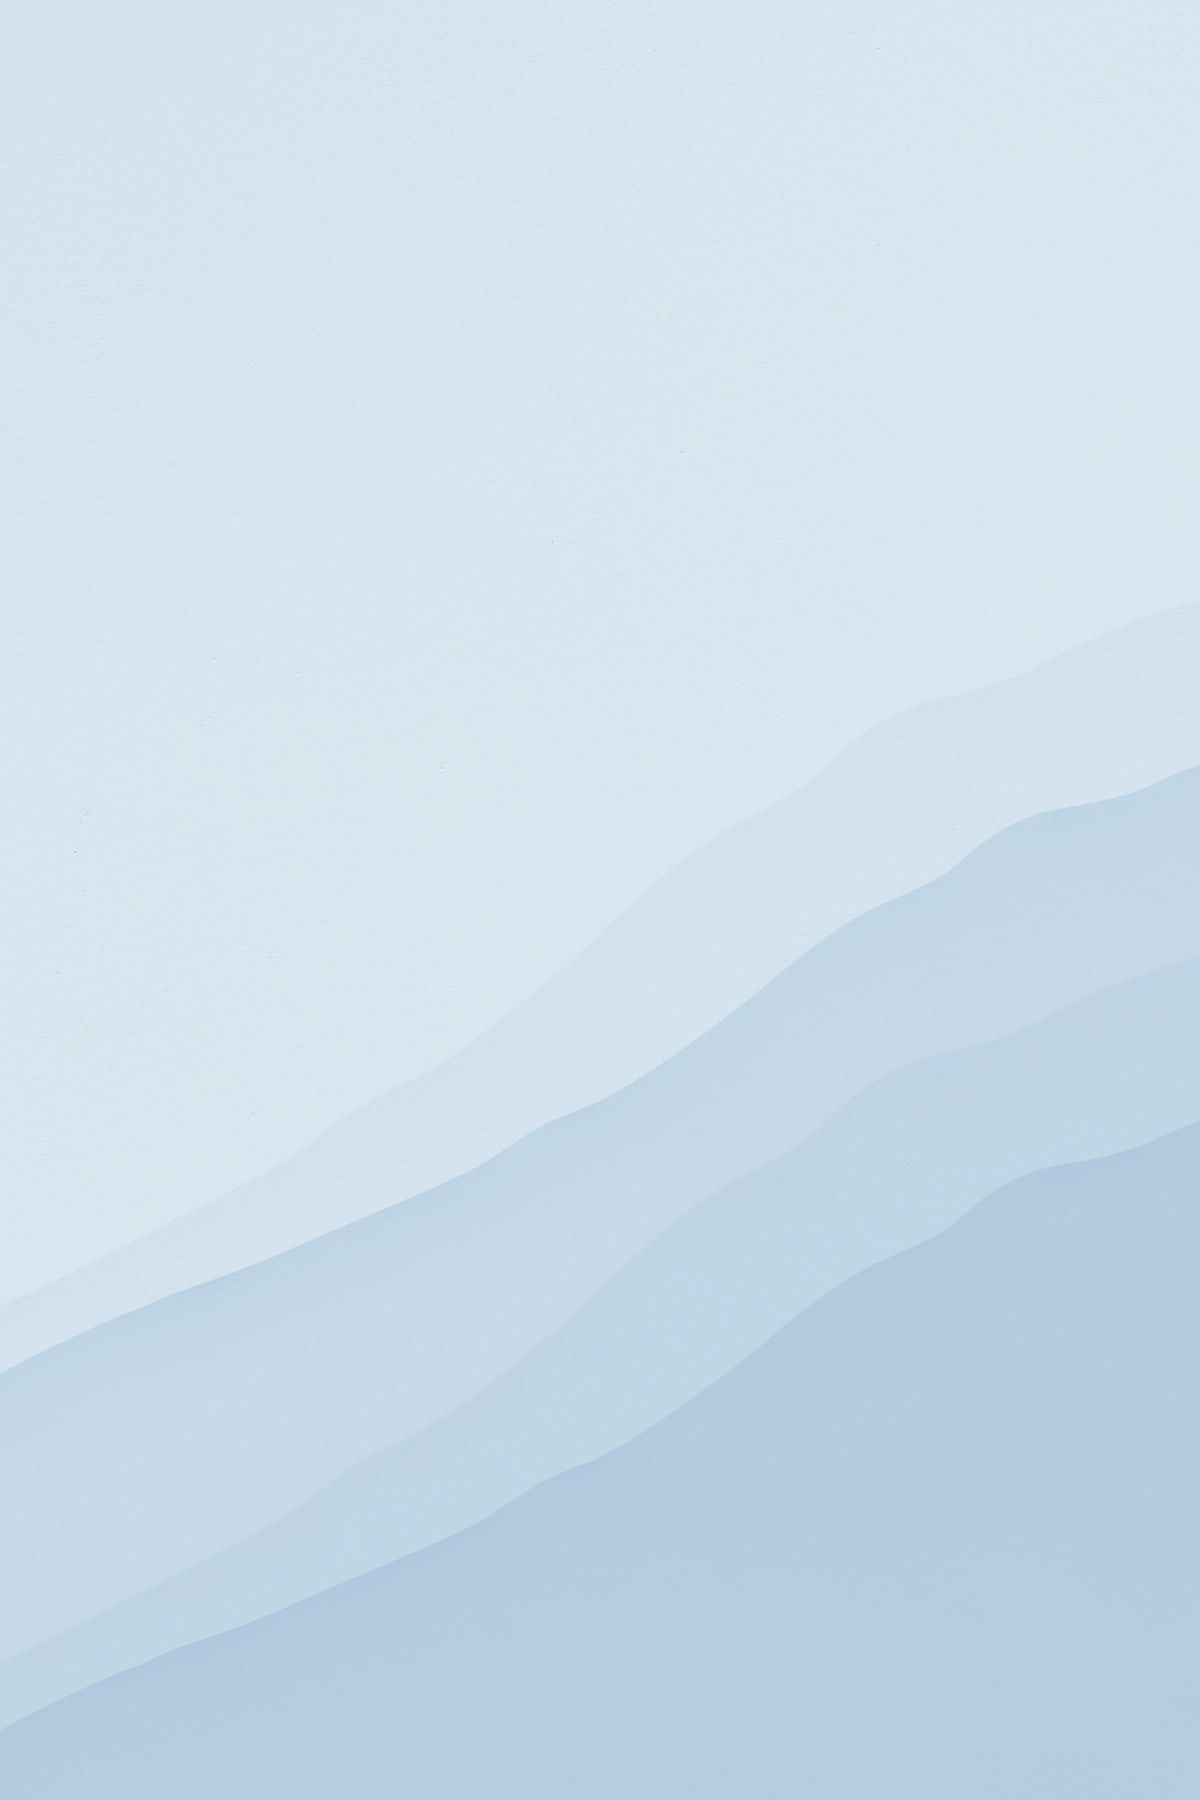 Light Blue Minimalist Wallpapers  Top Free Light Blue Minimalist  Backgrounds  WallpaperAccess